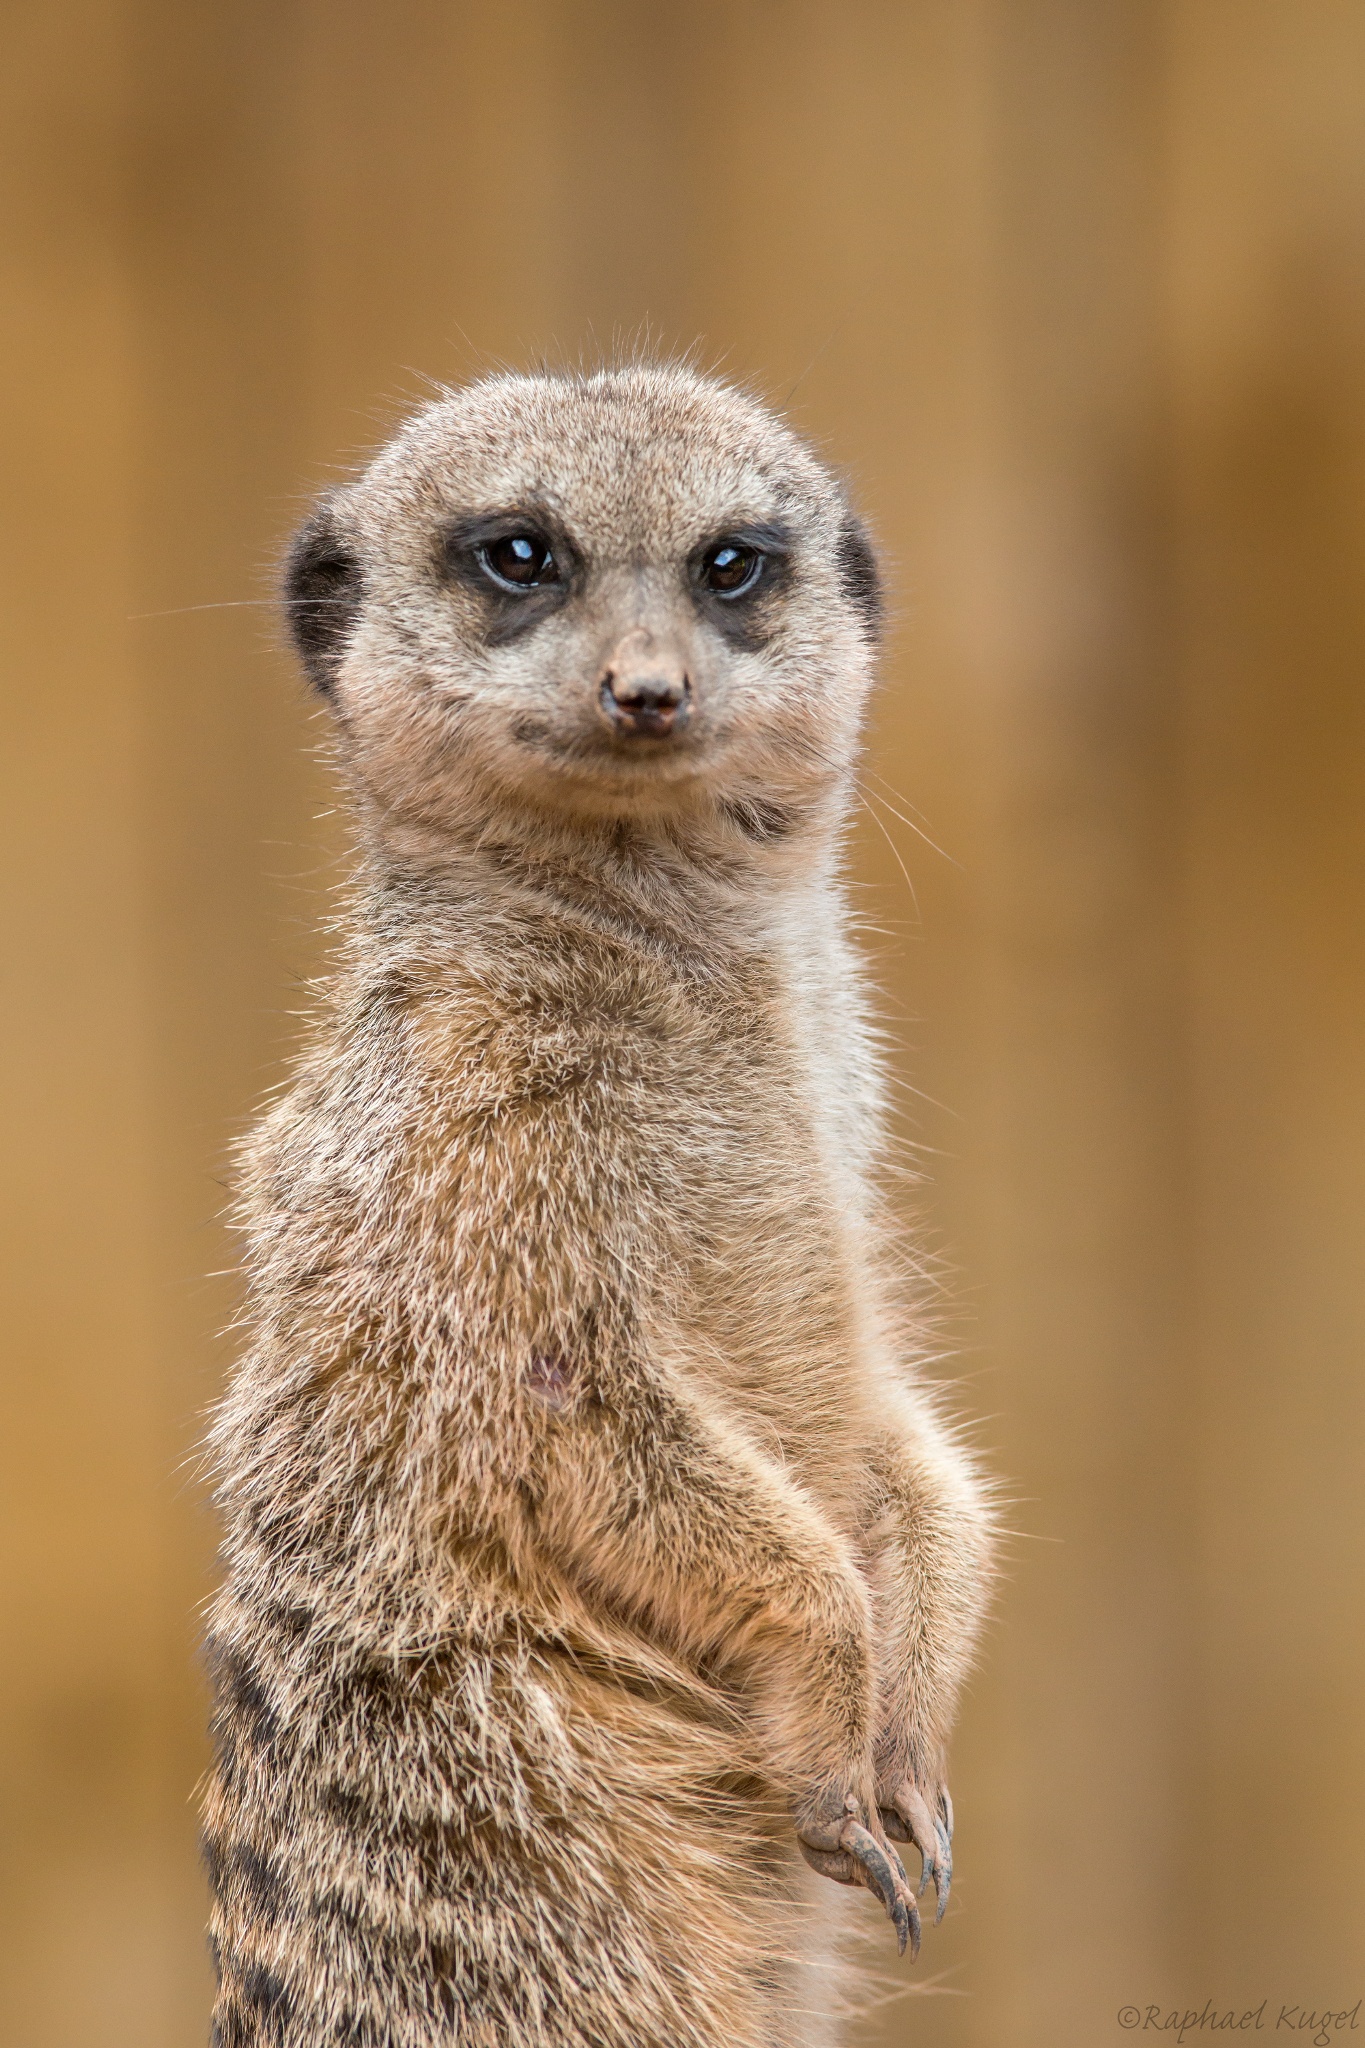 Meerkat by Raphael Kugel on 500px #animal #meerkat #photography | My ...